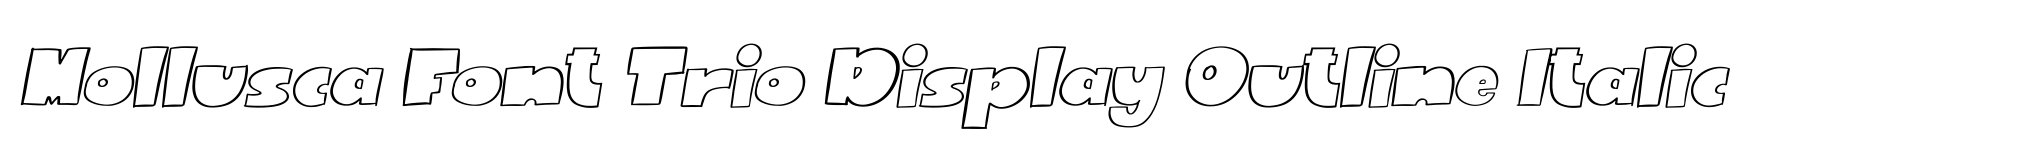 Mollusca Font Trio Display Outline Italic image